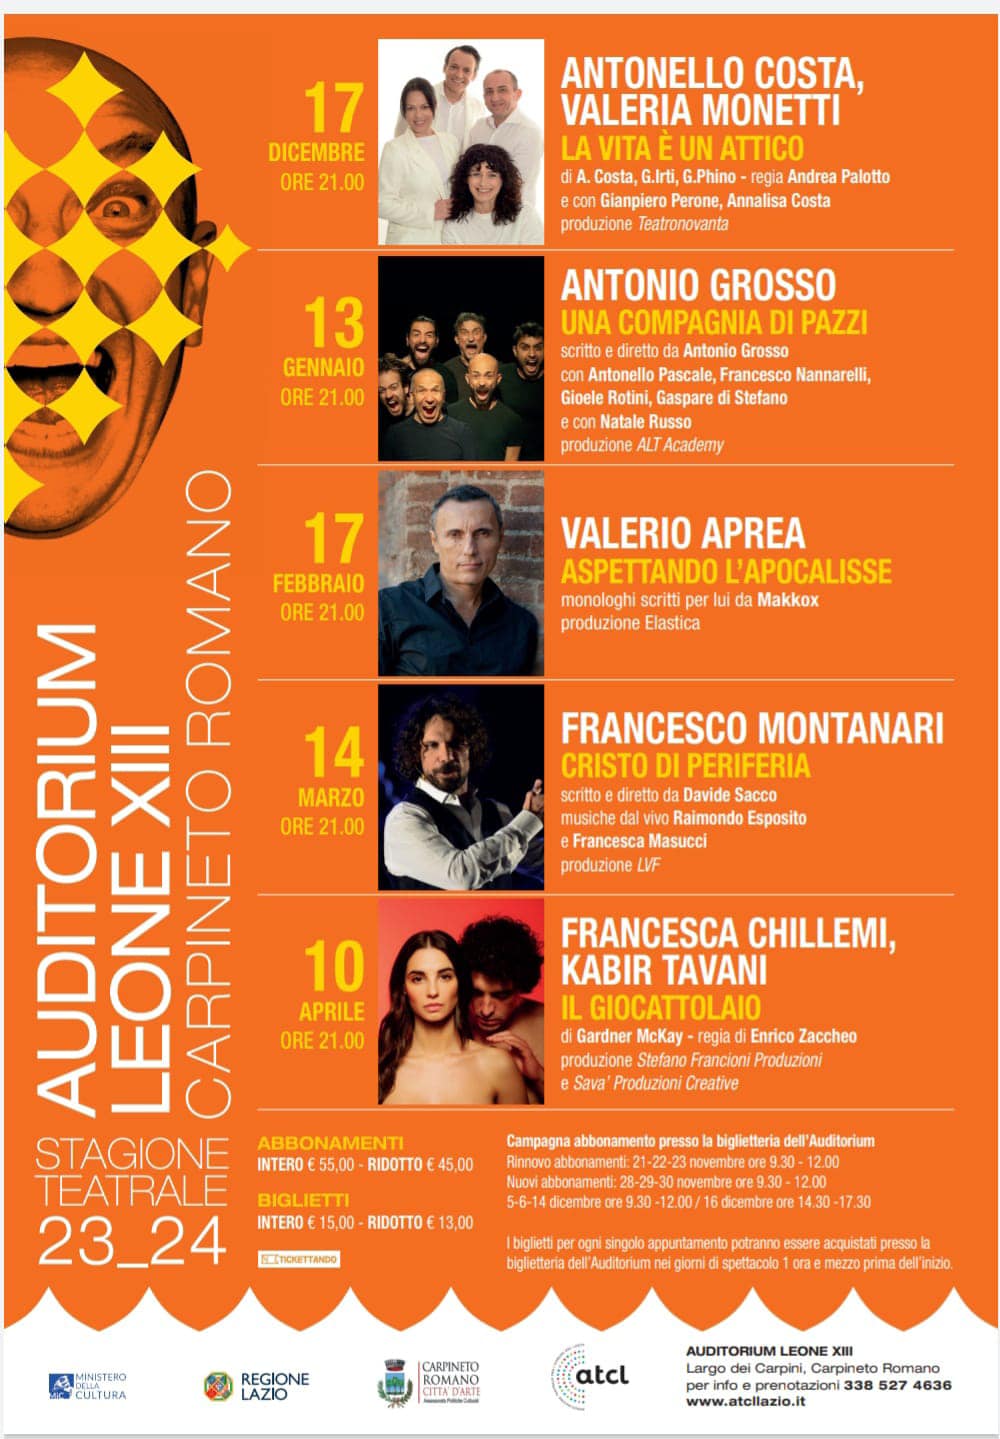 CARPINETO ROMANO: STAGIONE TEATRALE 2023-2024 @ Auditorium Leone XIII